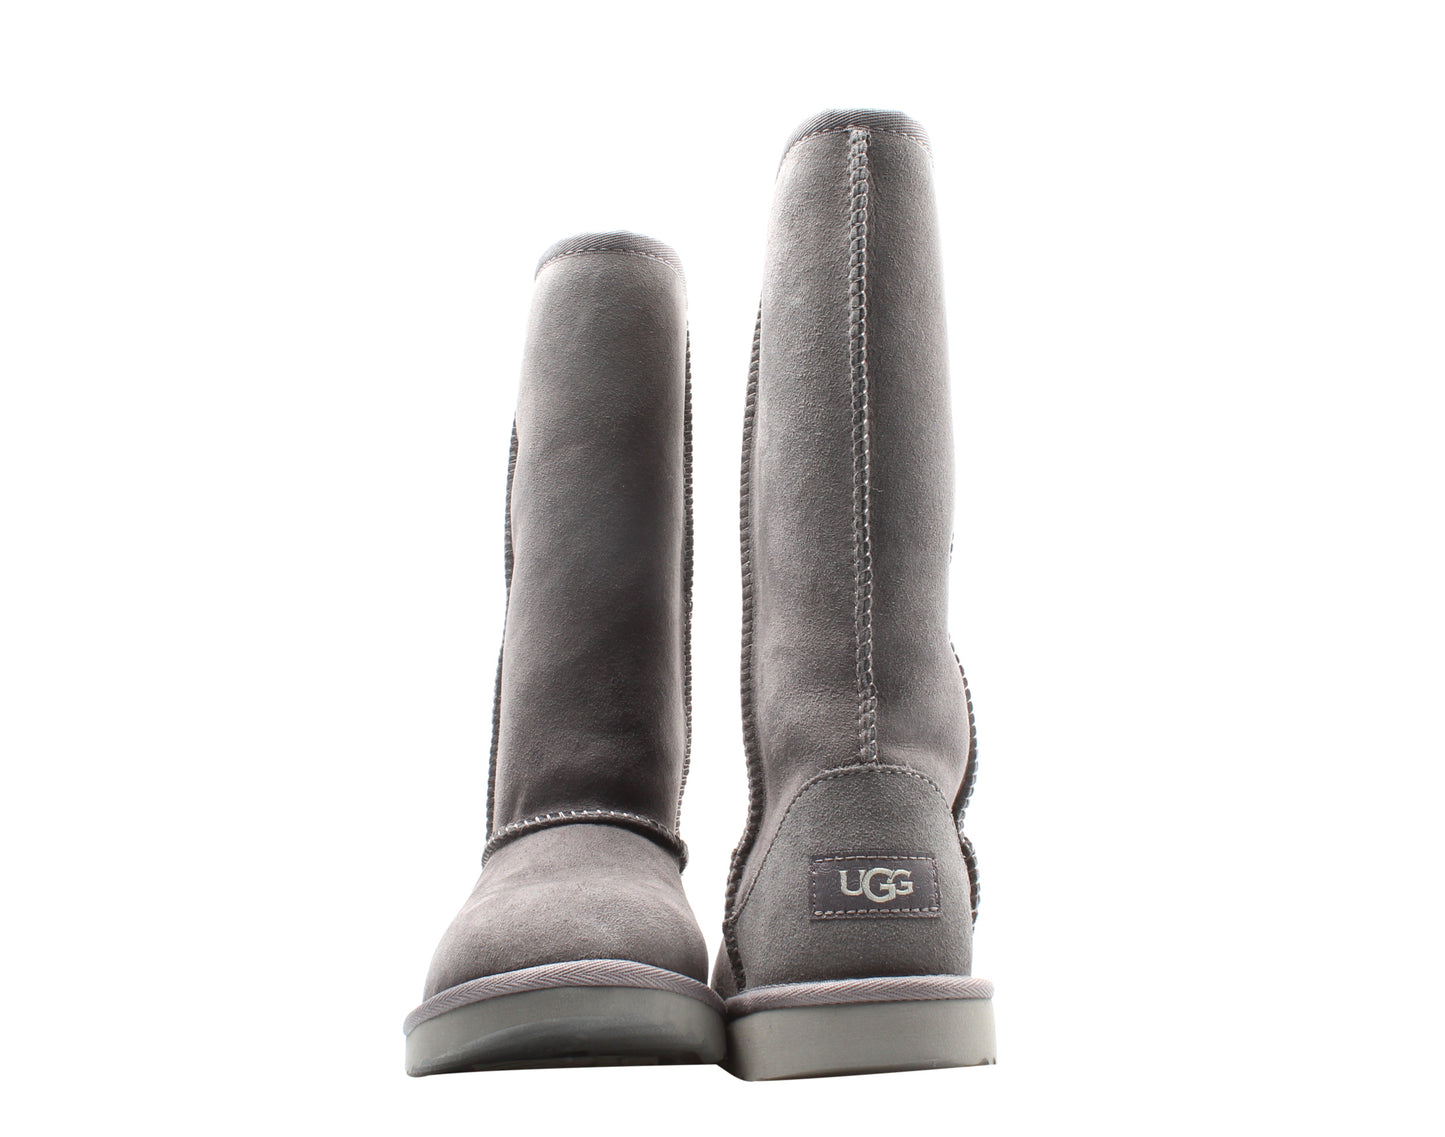 UGG Australia Classic Tall II Grey Big Kids Boots 1017713K-GREY